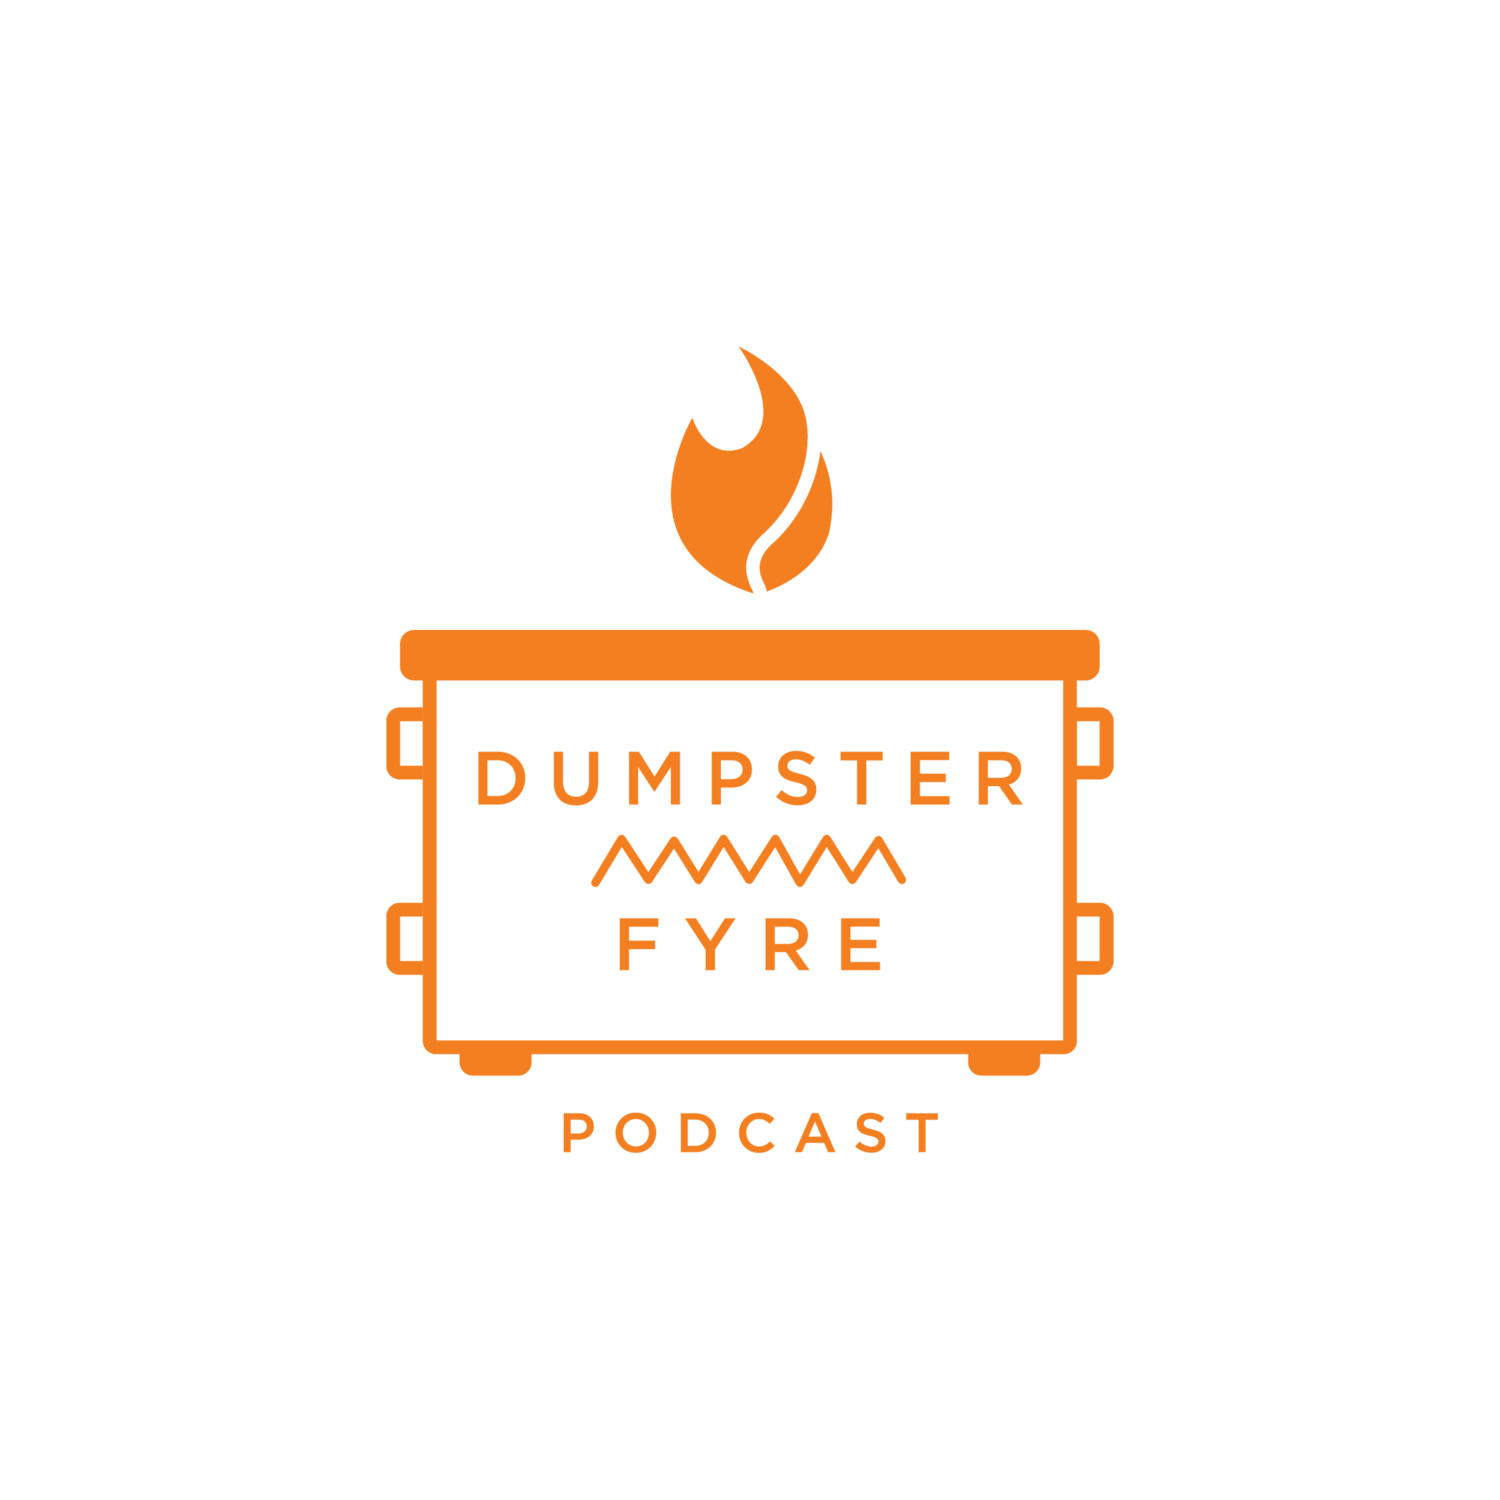 Dumpster FYRE Podcast